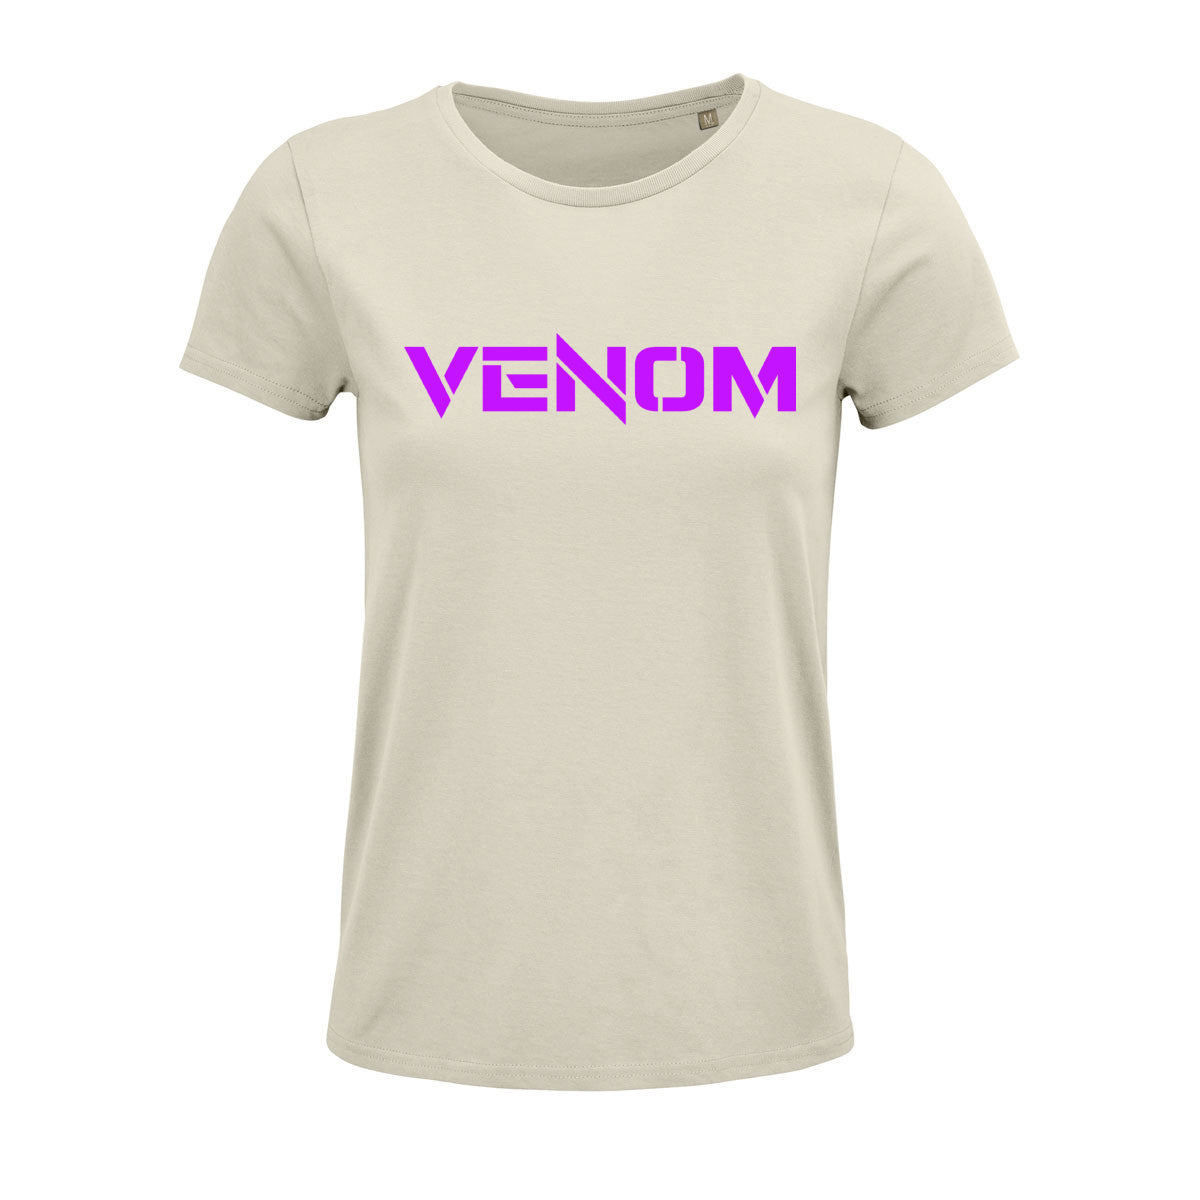 Venom Lady-Shirt creme lilaner Schriftzug